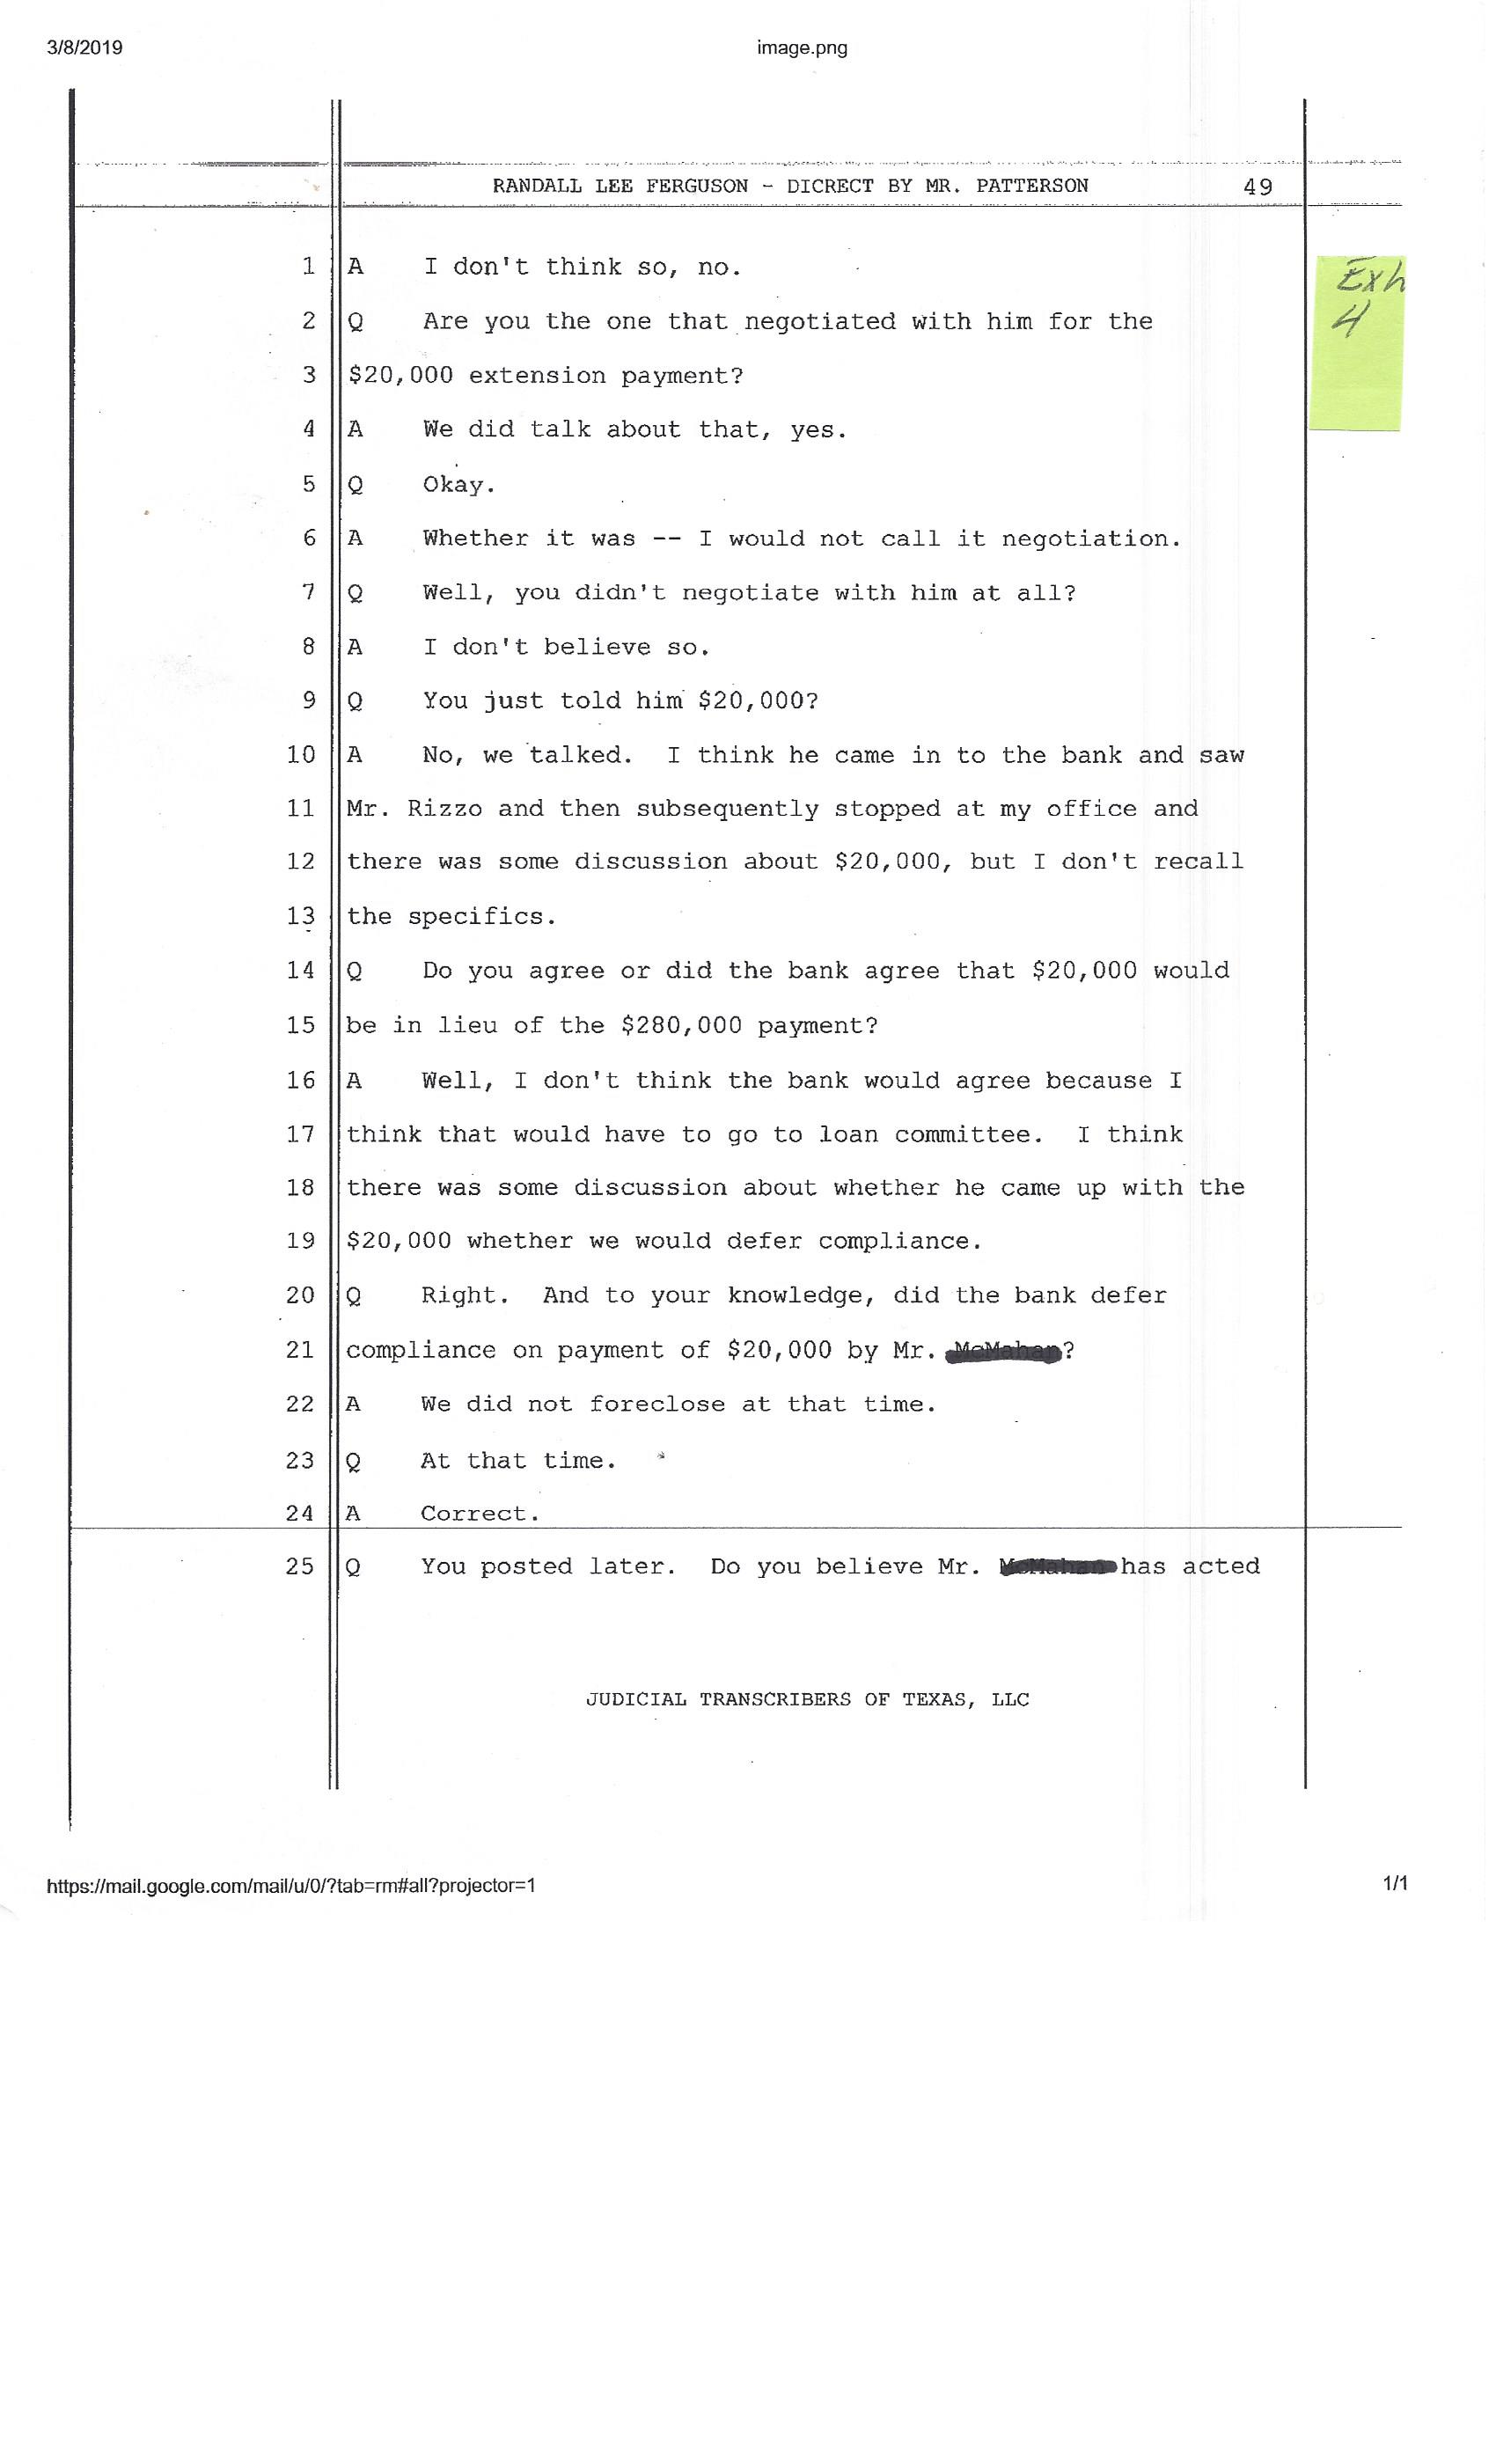 Ferguson testimony page 49